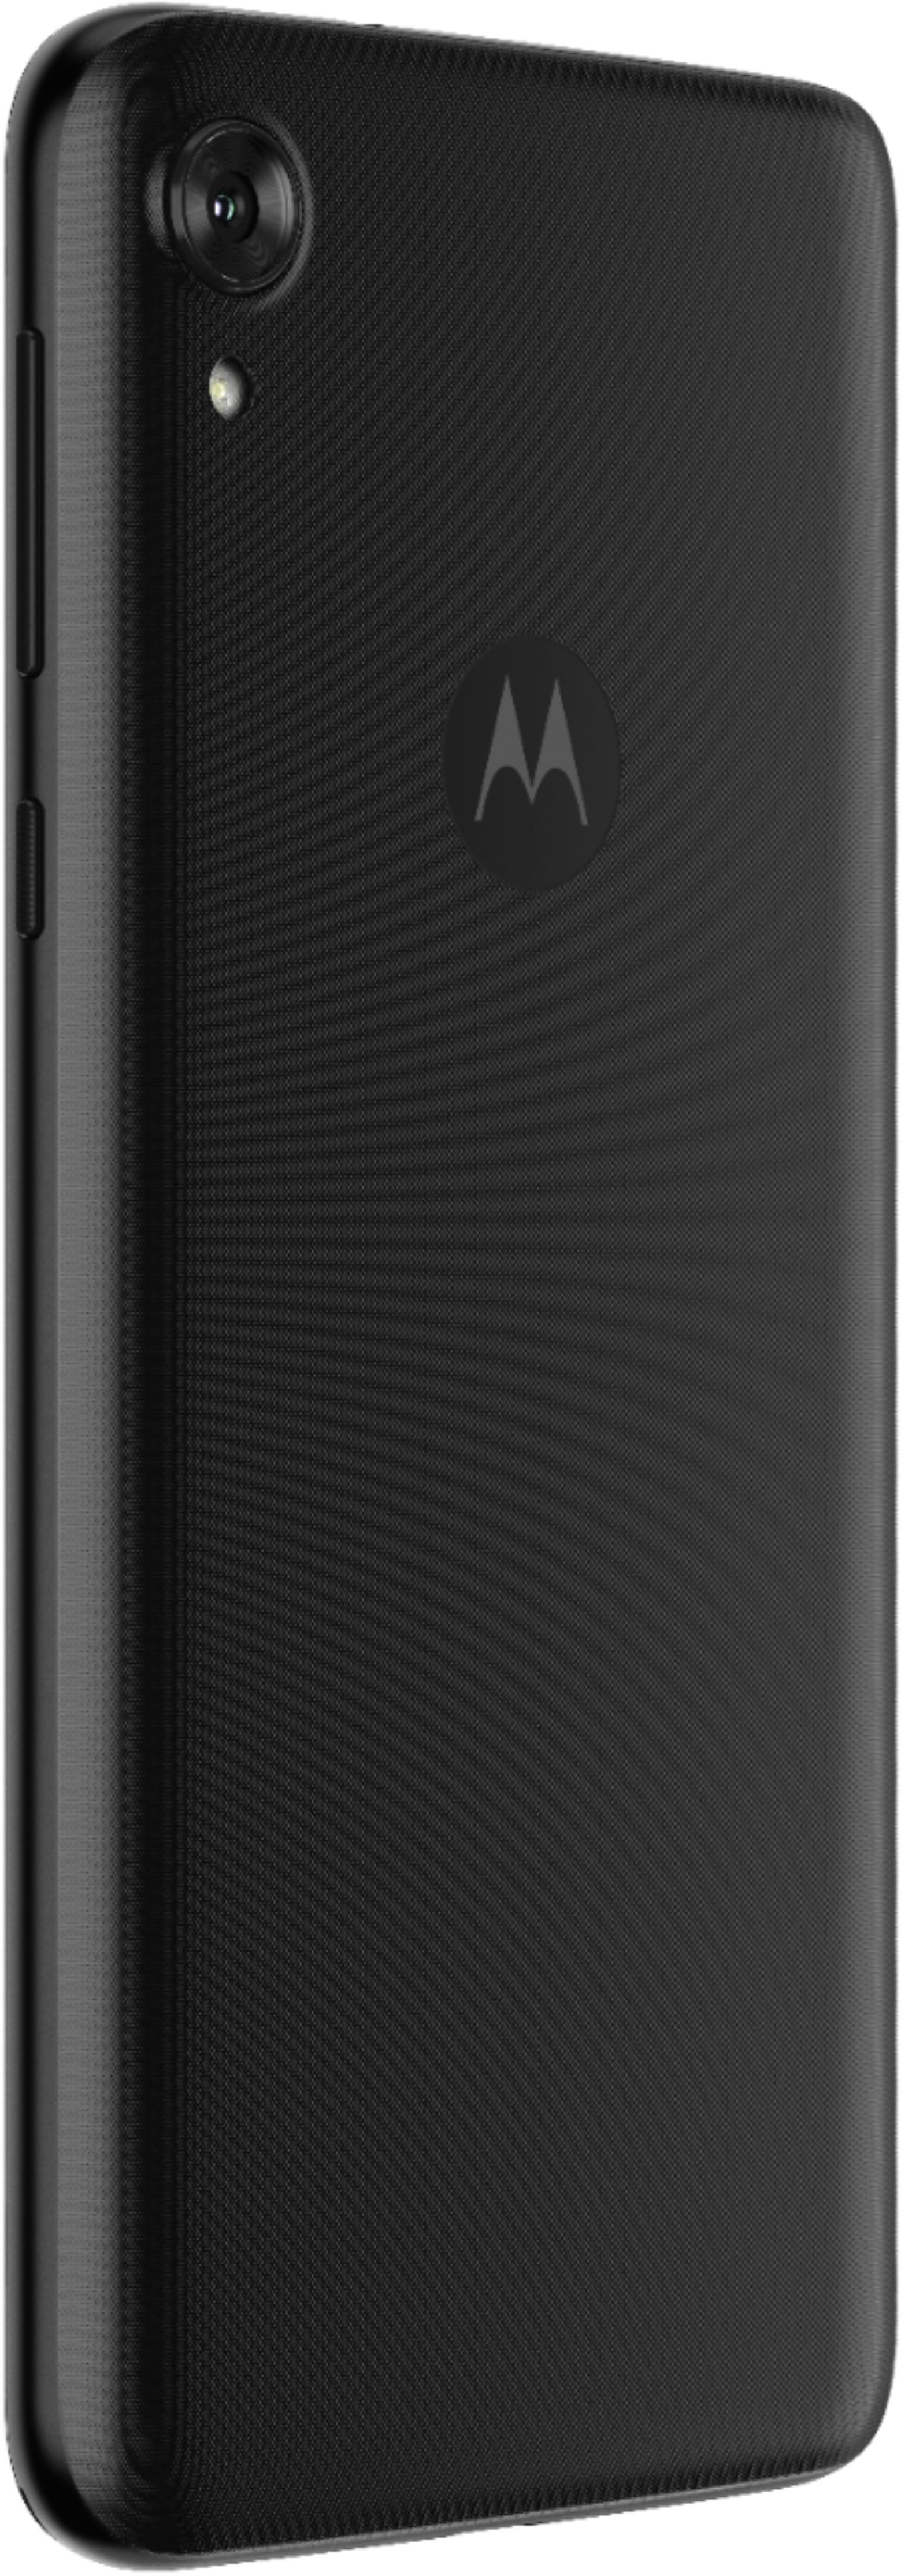 Simple Mobile Motorola Moto E6, 16GB, Black - Prepaid Smartphone 